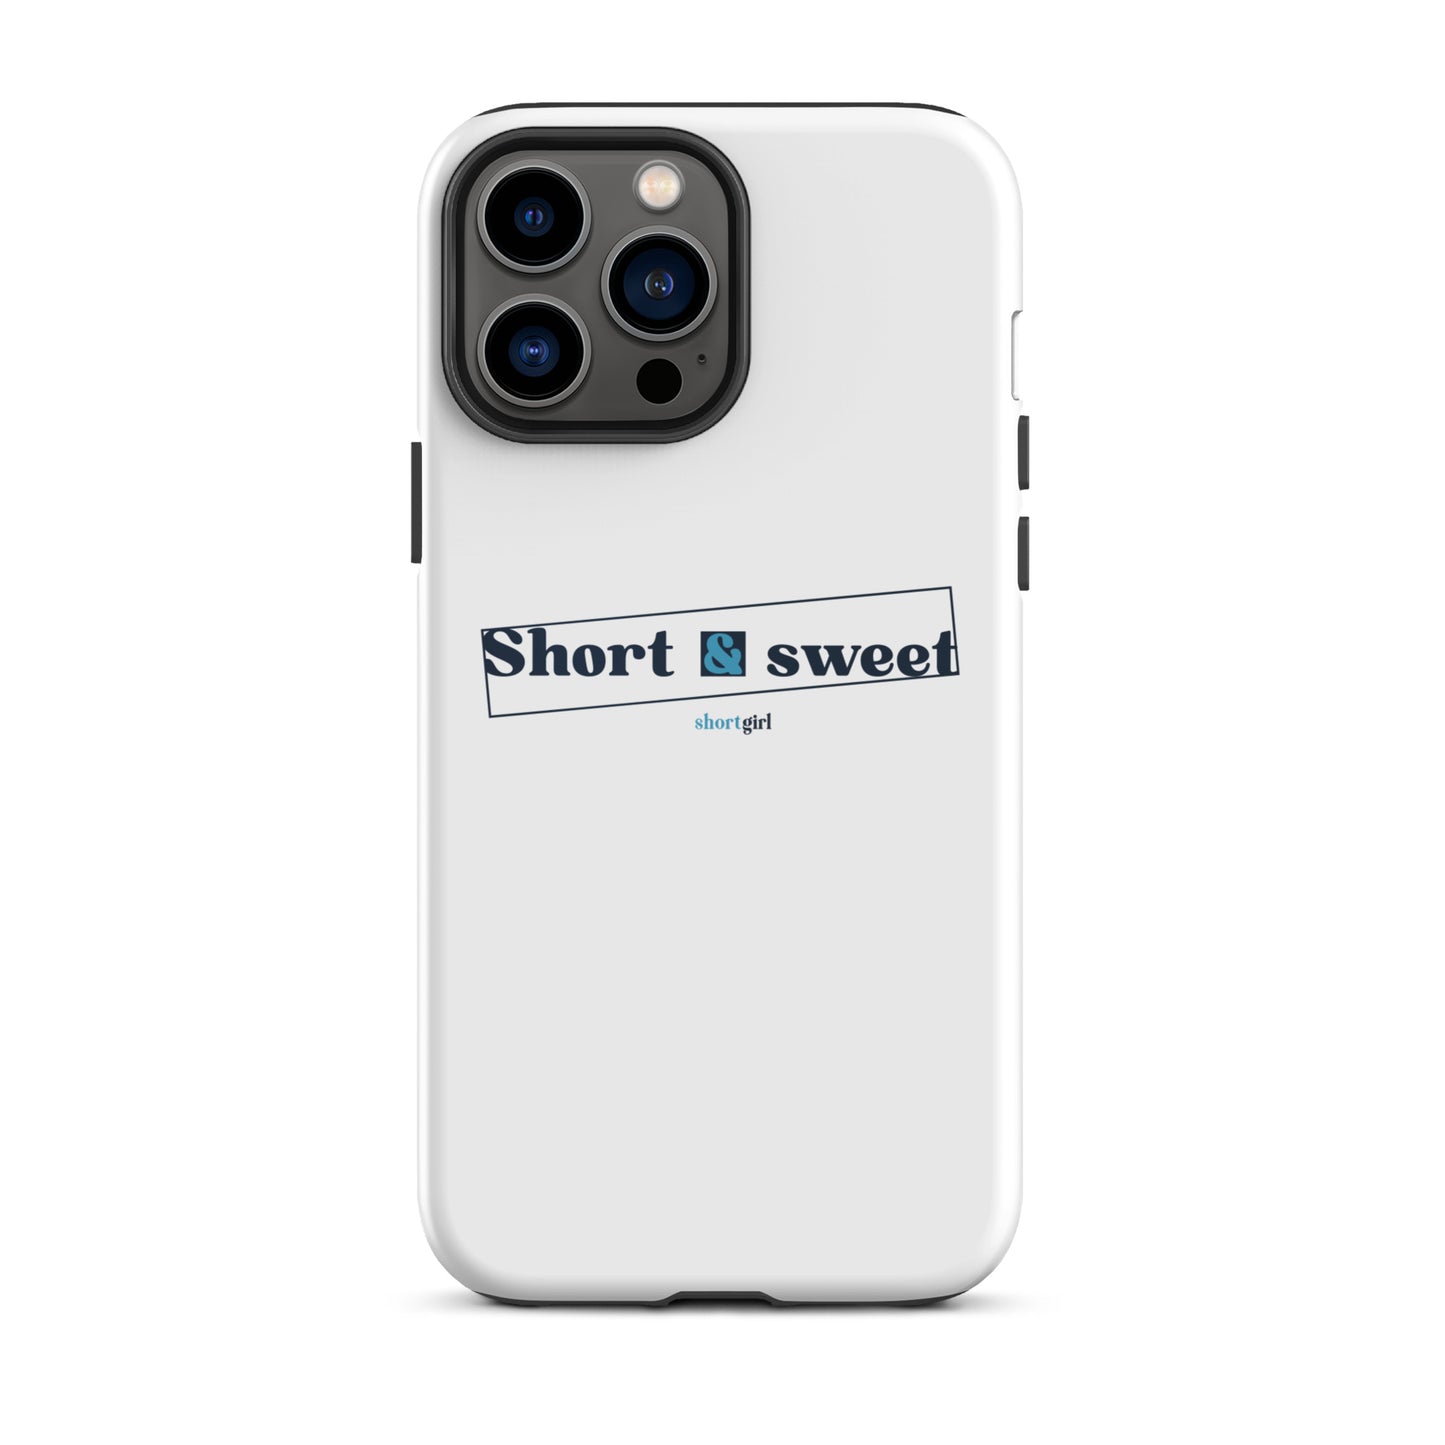 Tough iPhone case - Short & sweet